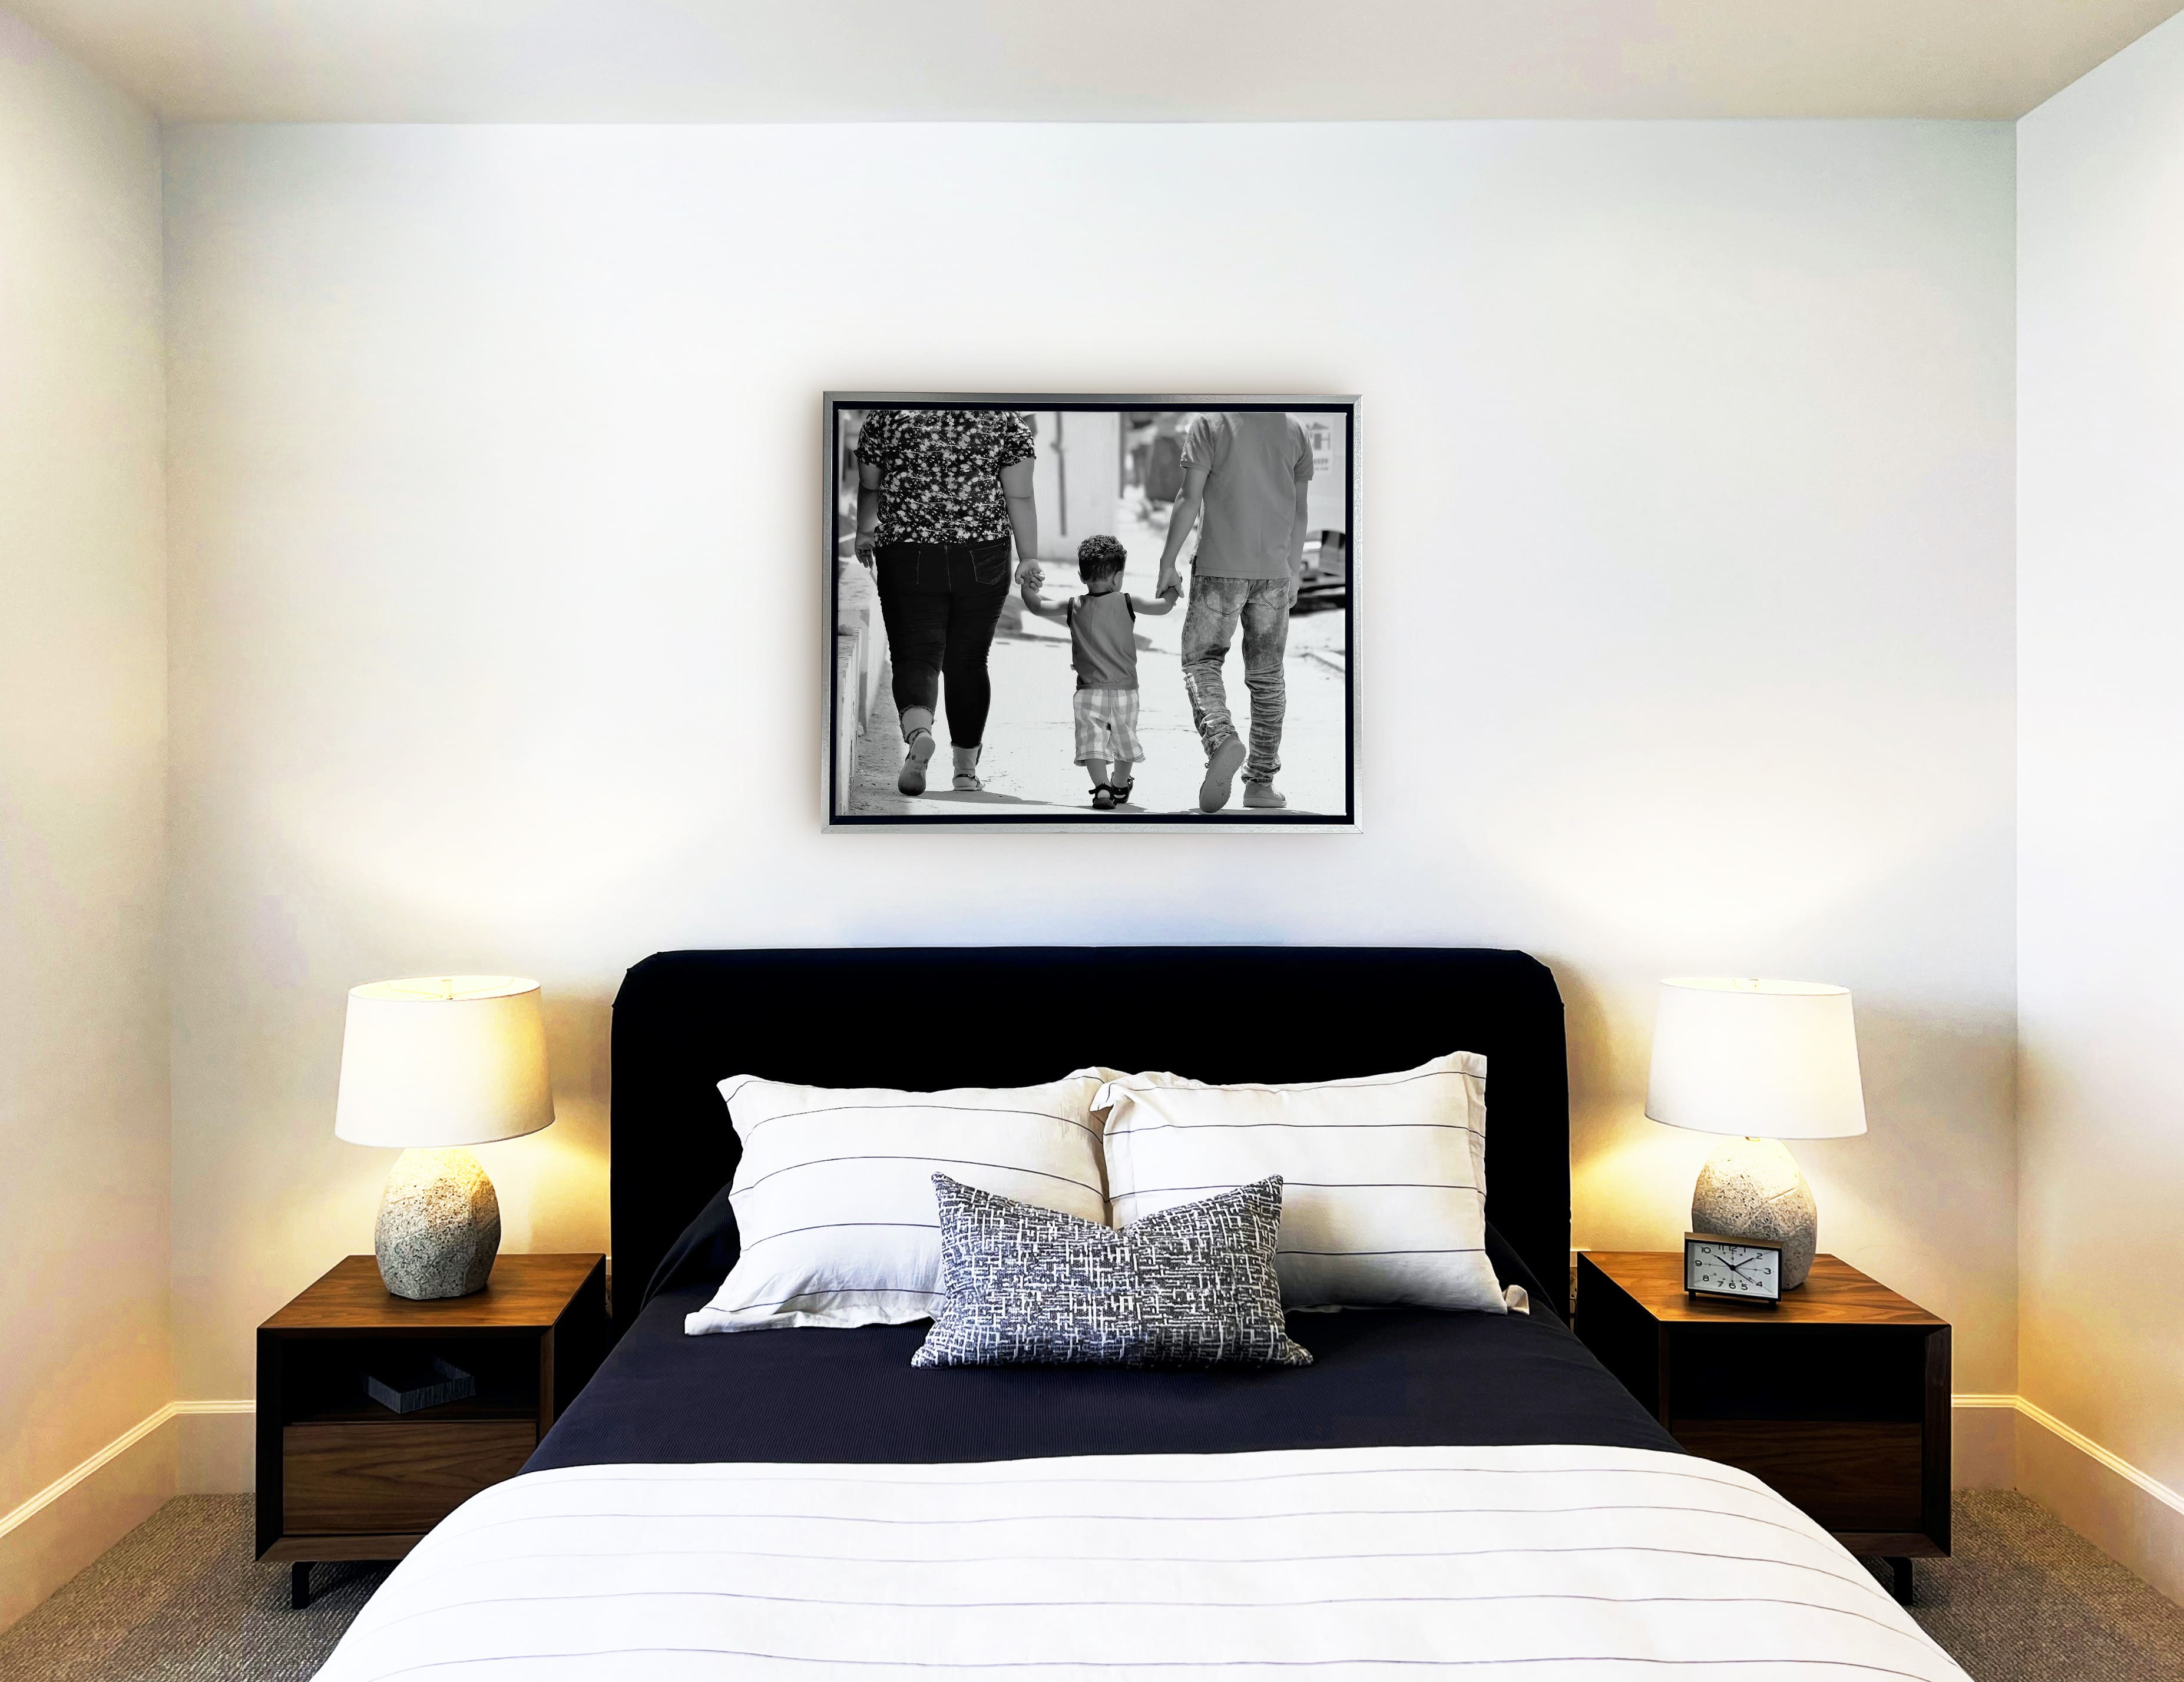 Float frame in bedroom of black and white family portrait